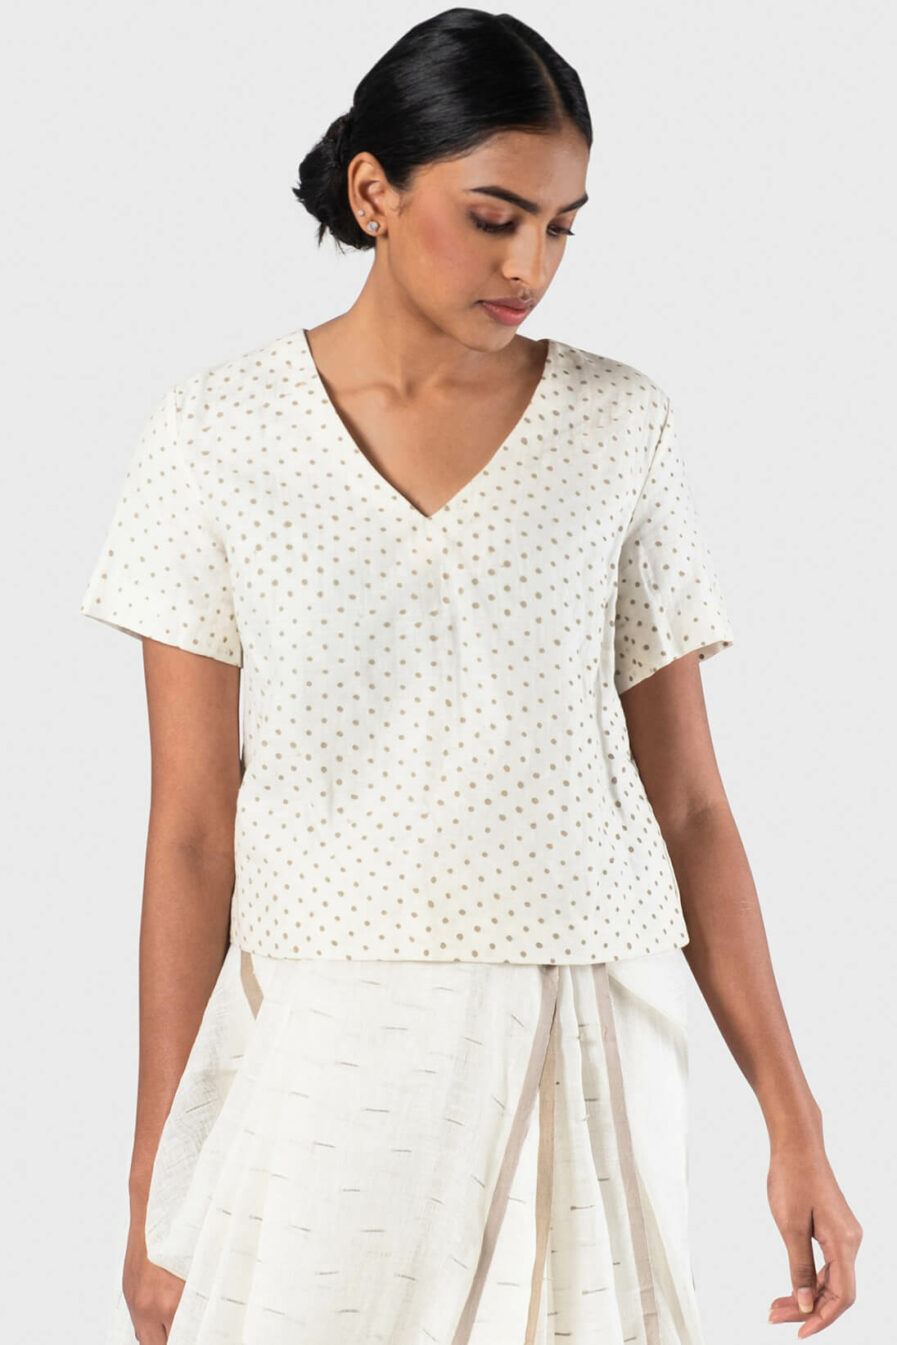 Anavila White V-neck polka blouse